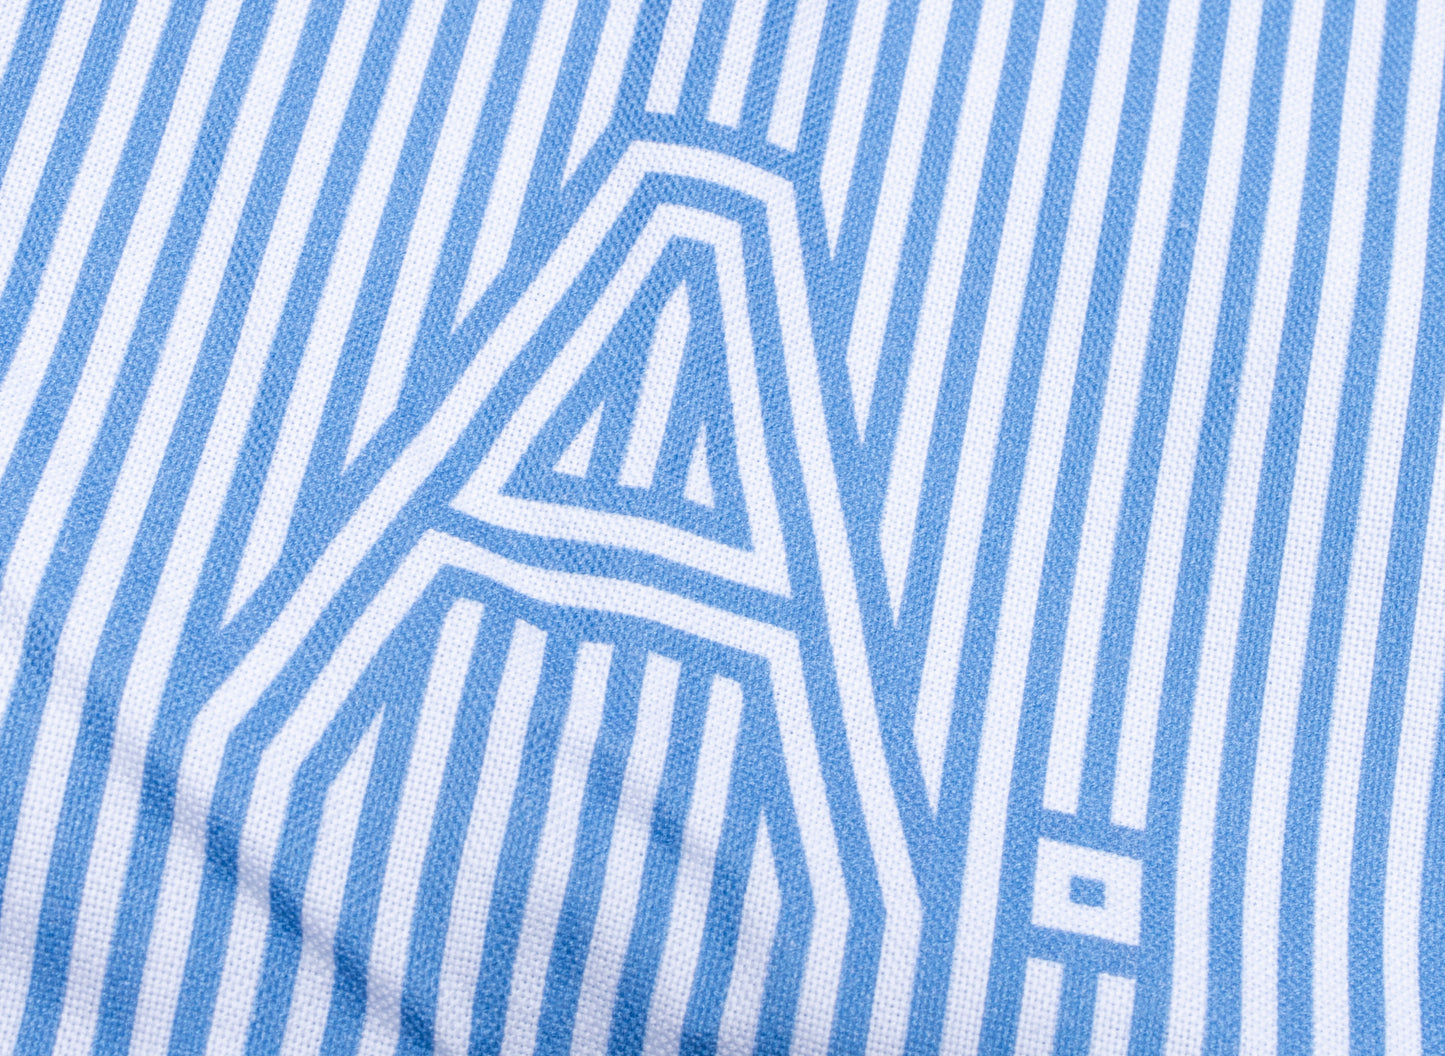 A.P.C. Malo Shirt in Blue xld